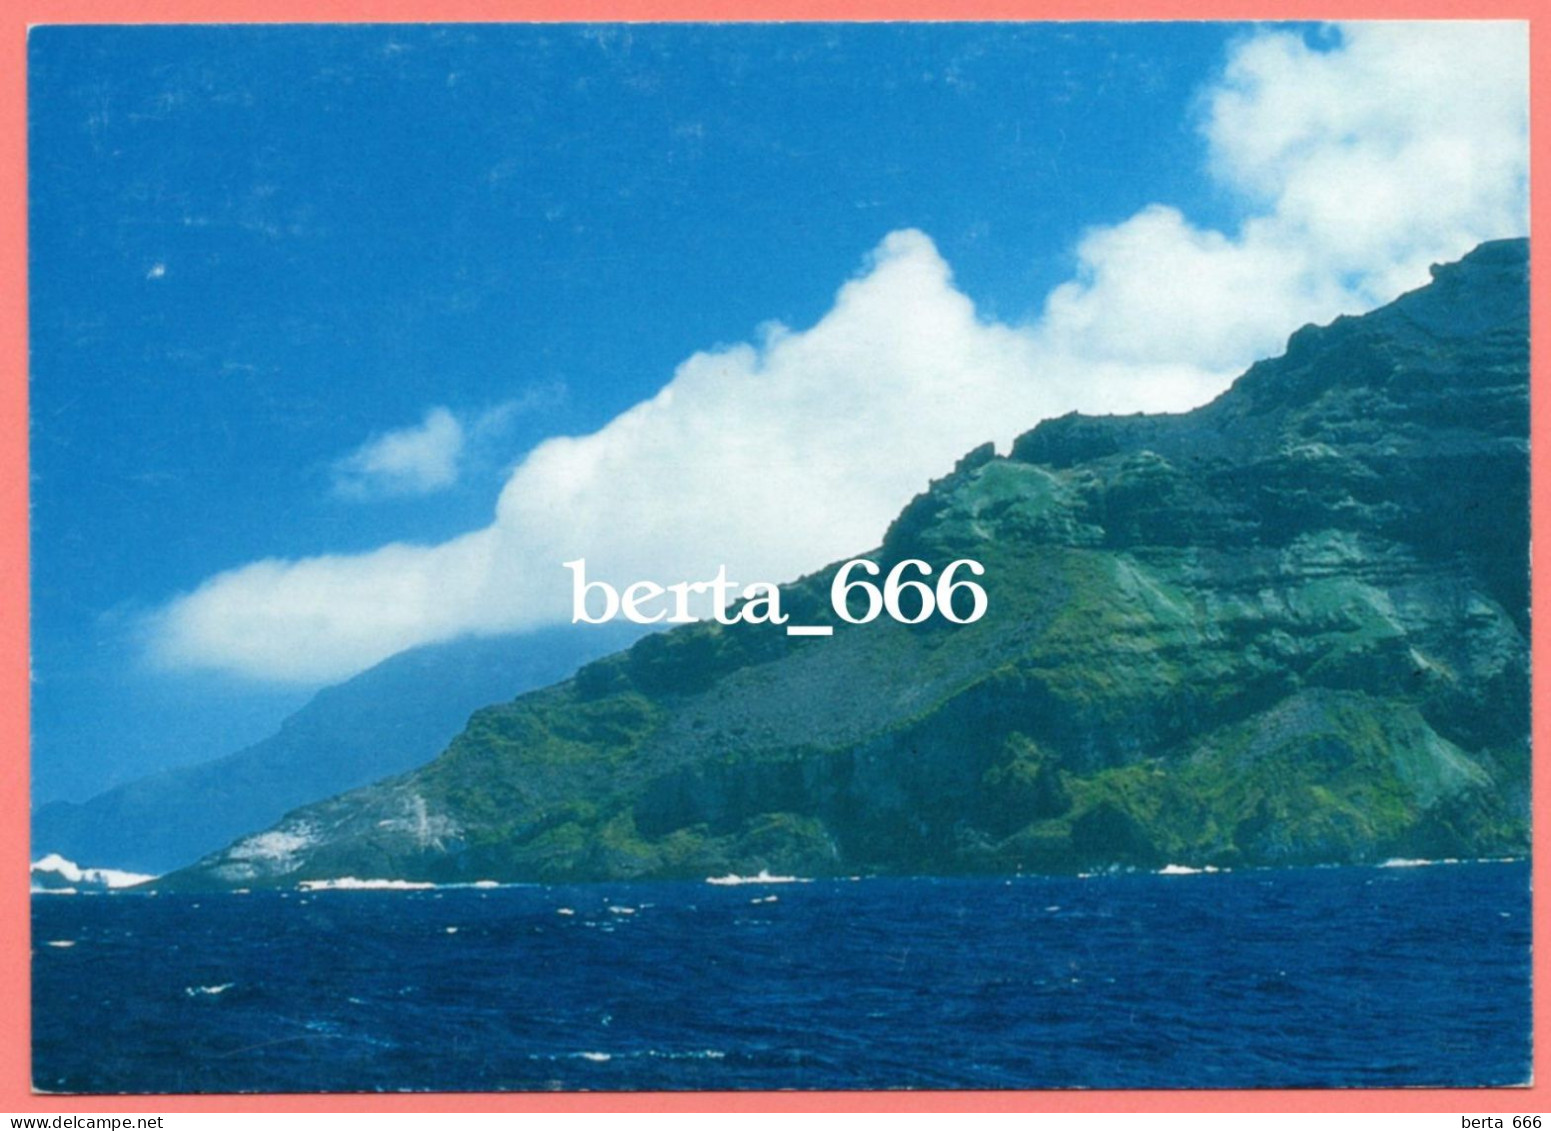 TAAF Crozet Possession Island UNESCO New Postcard - TAAF : Territori Francesi Meridionali